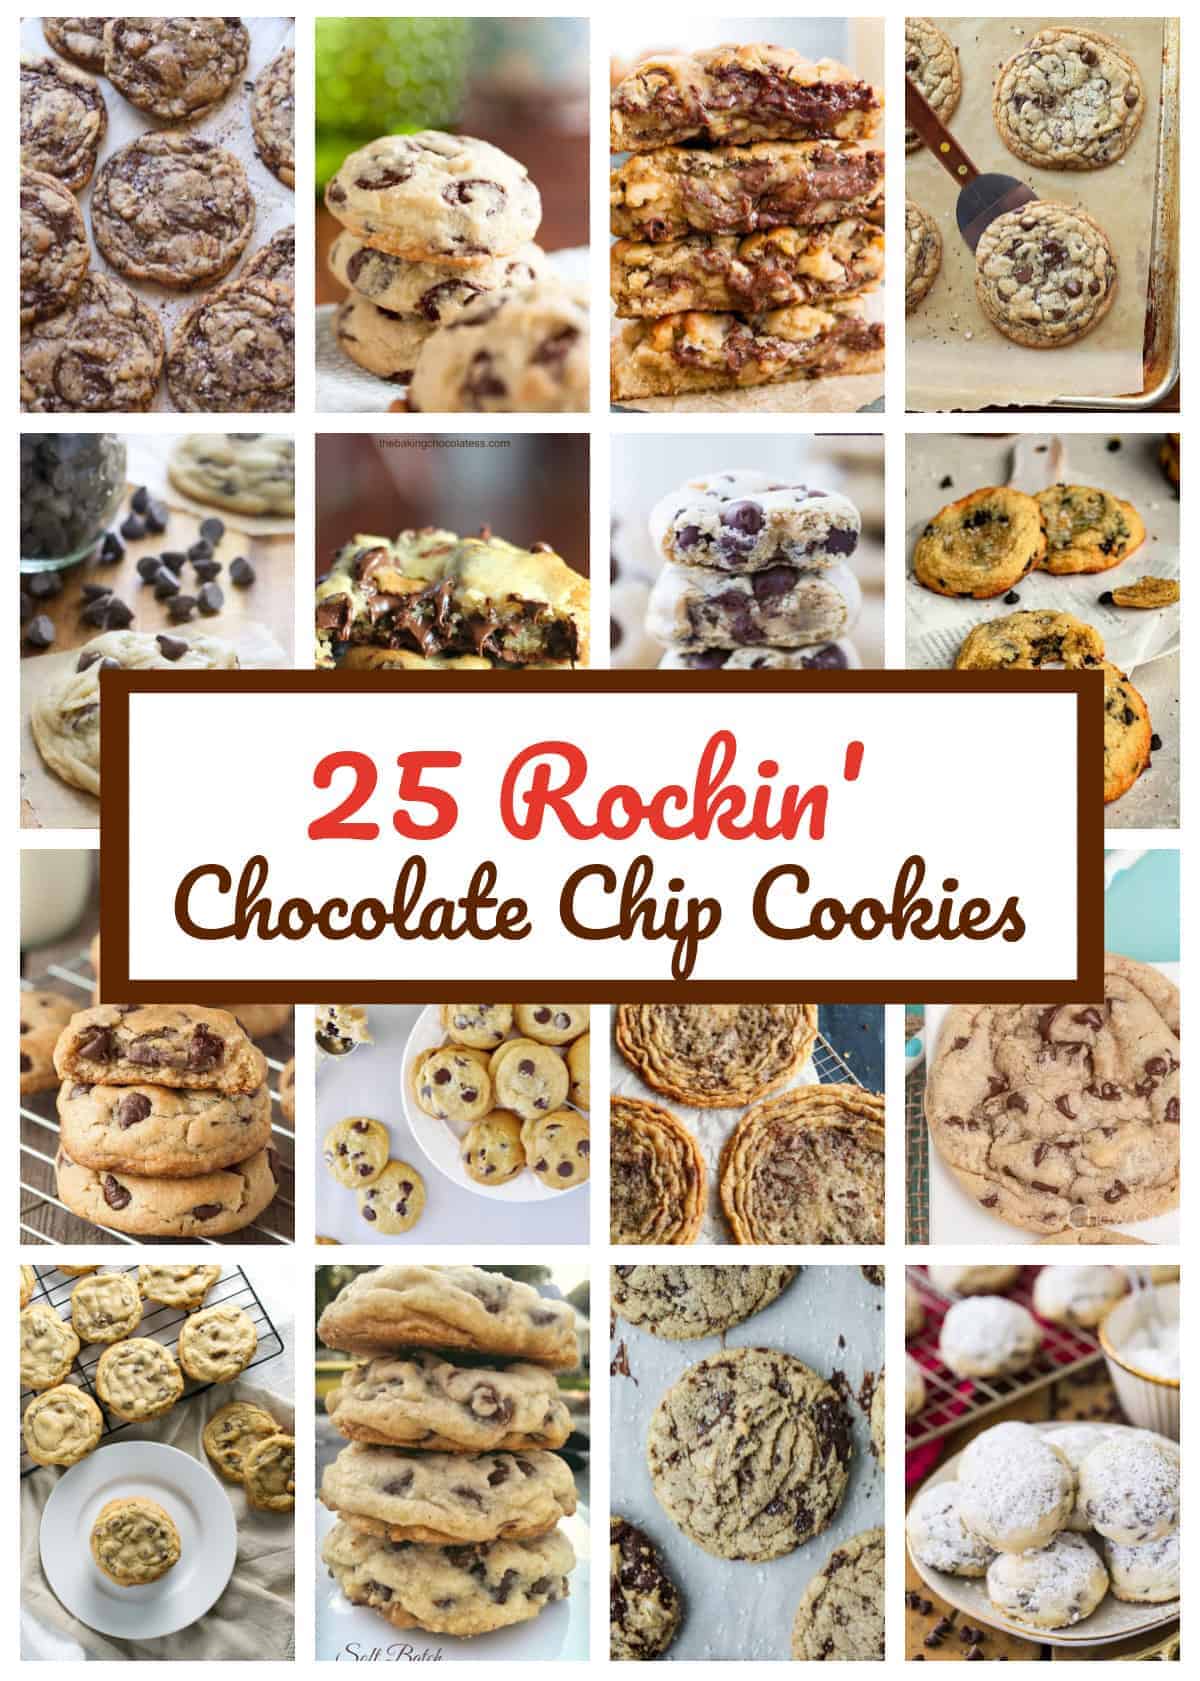 25 Rockin’ Chocolate Chip Cookie Recipes